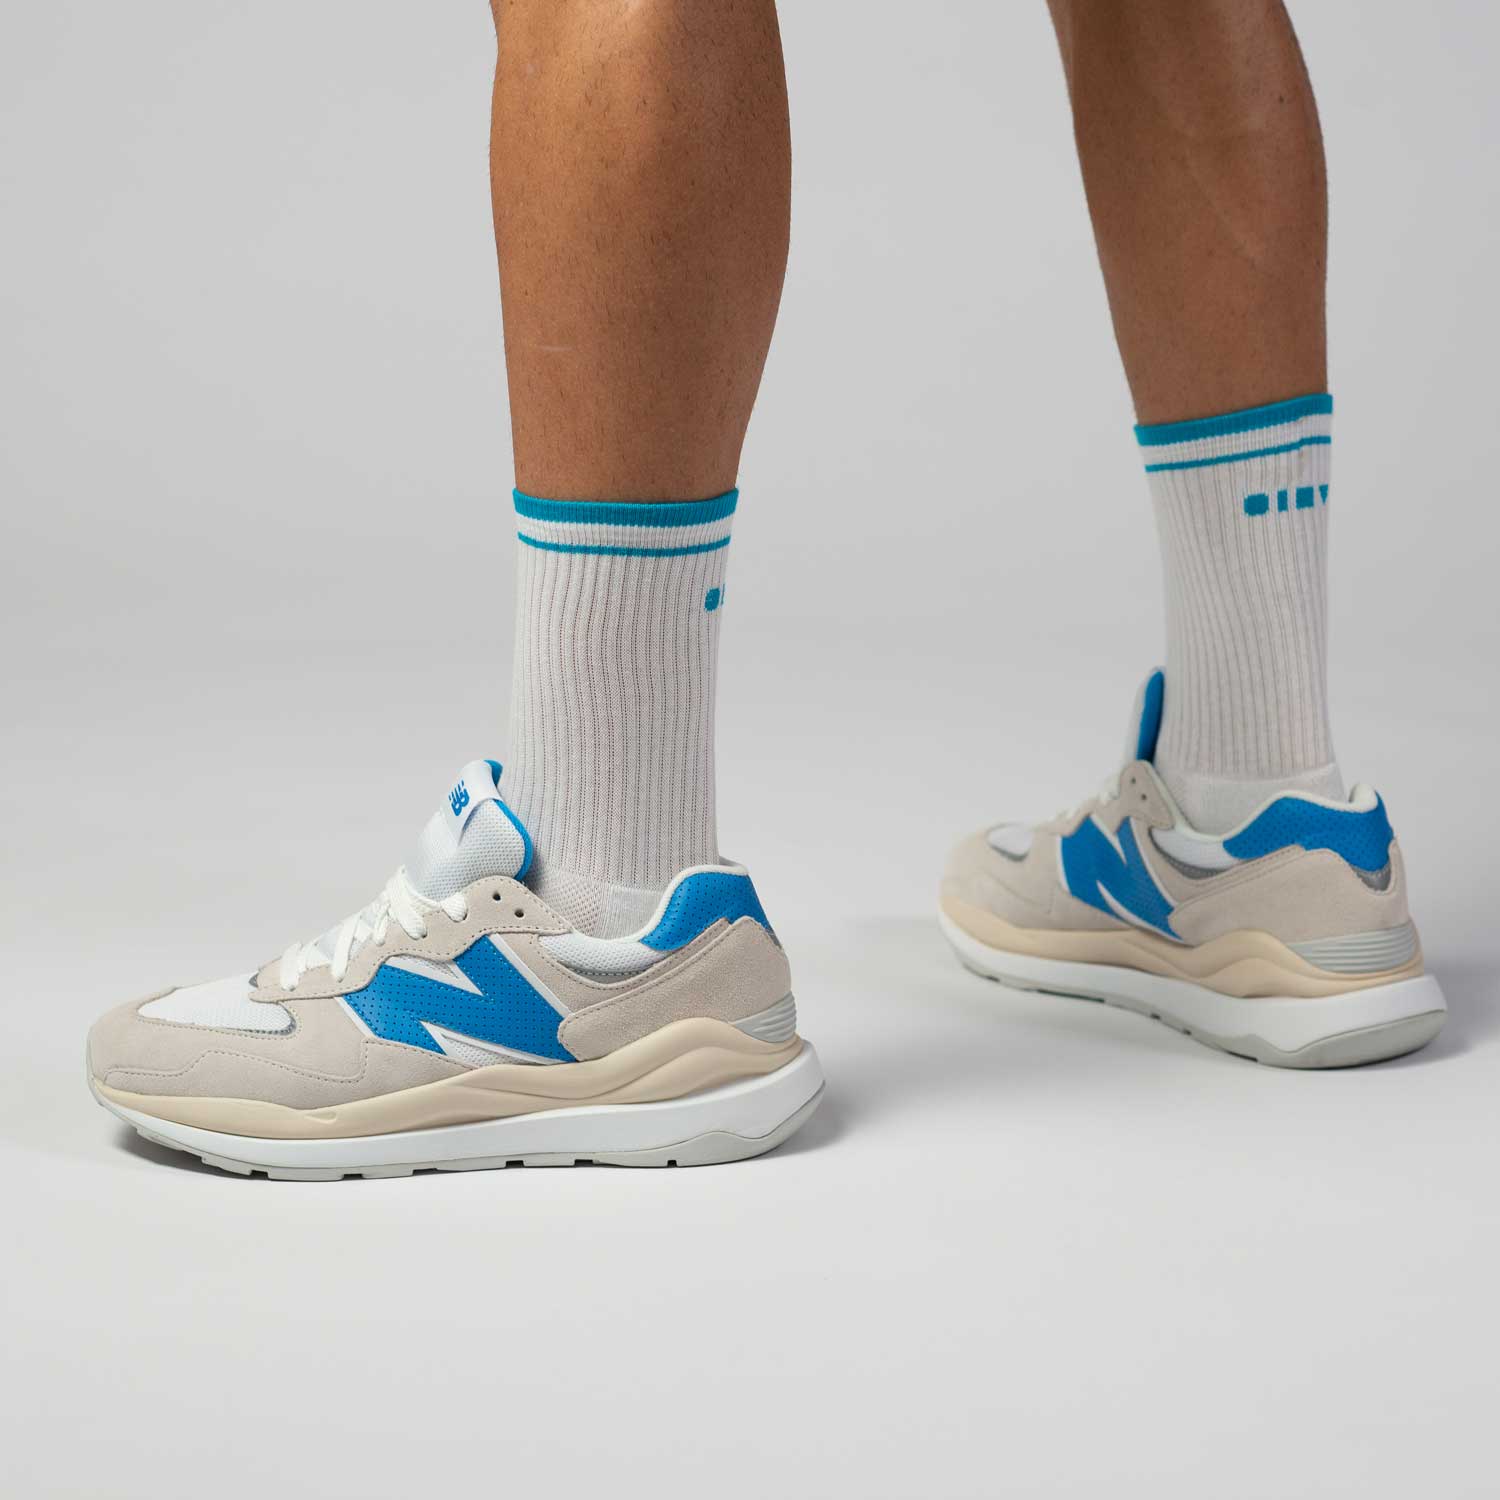 Retro Court tennis socks with New Balance shoes. Tennis socks made in Australia.